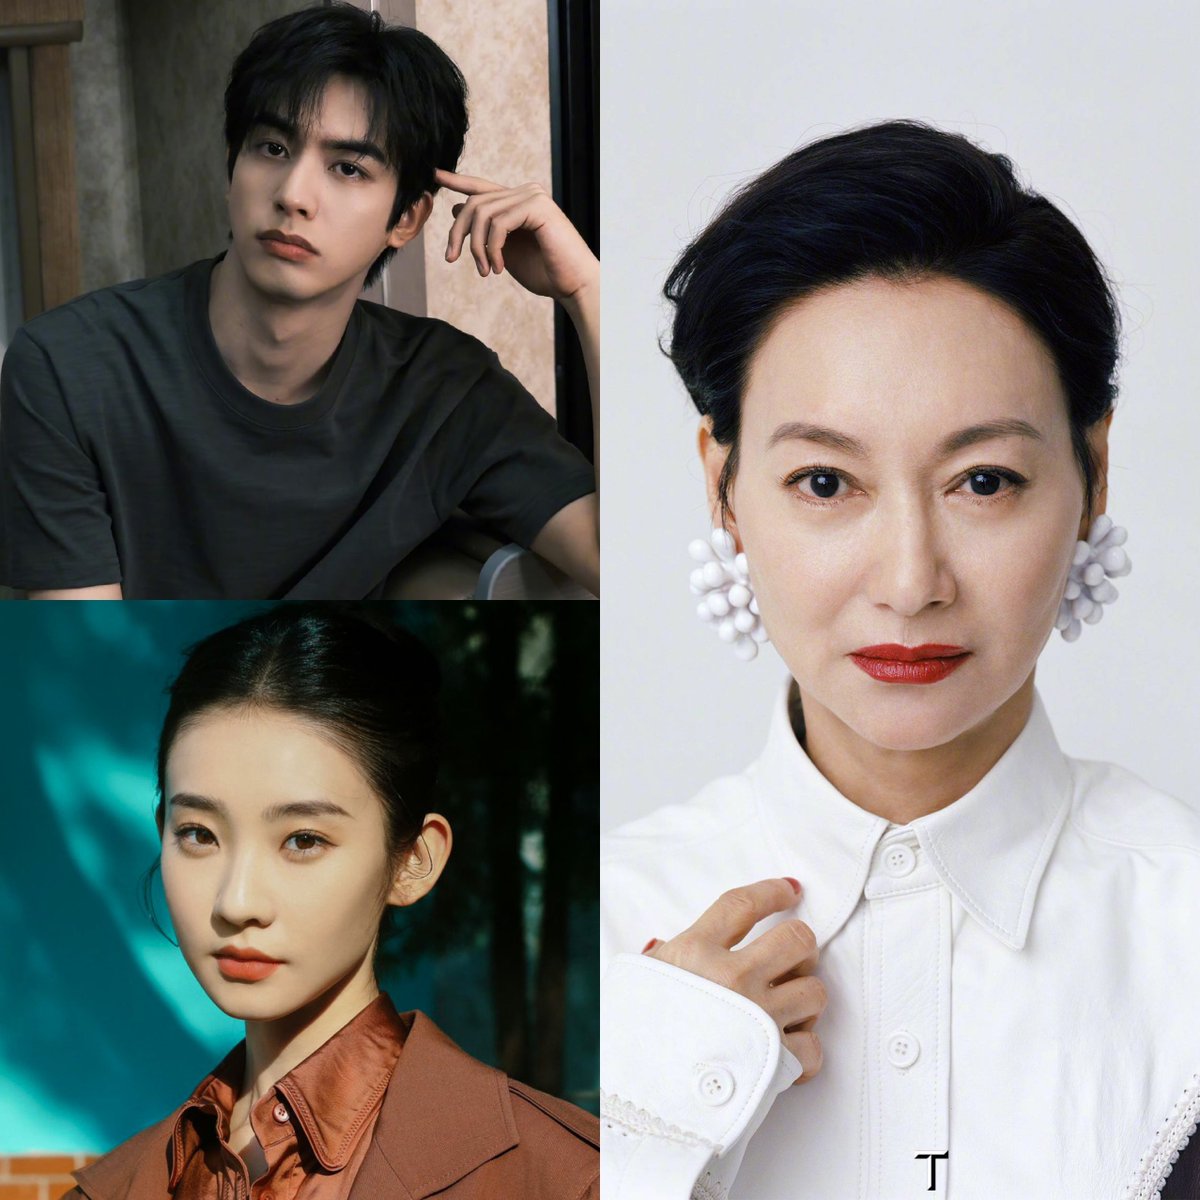 🍉 Youku’s Fantasy Drama #恰似你的温柔
• Remake of Korean Drama “The Light In Your Eyes”
• Casts: #SongWeilong #ZhangYifan #KaraHui